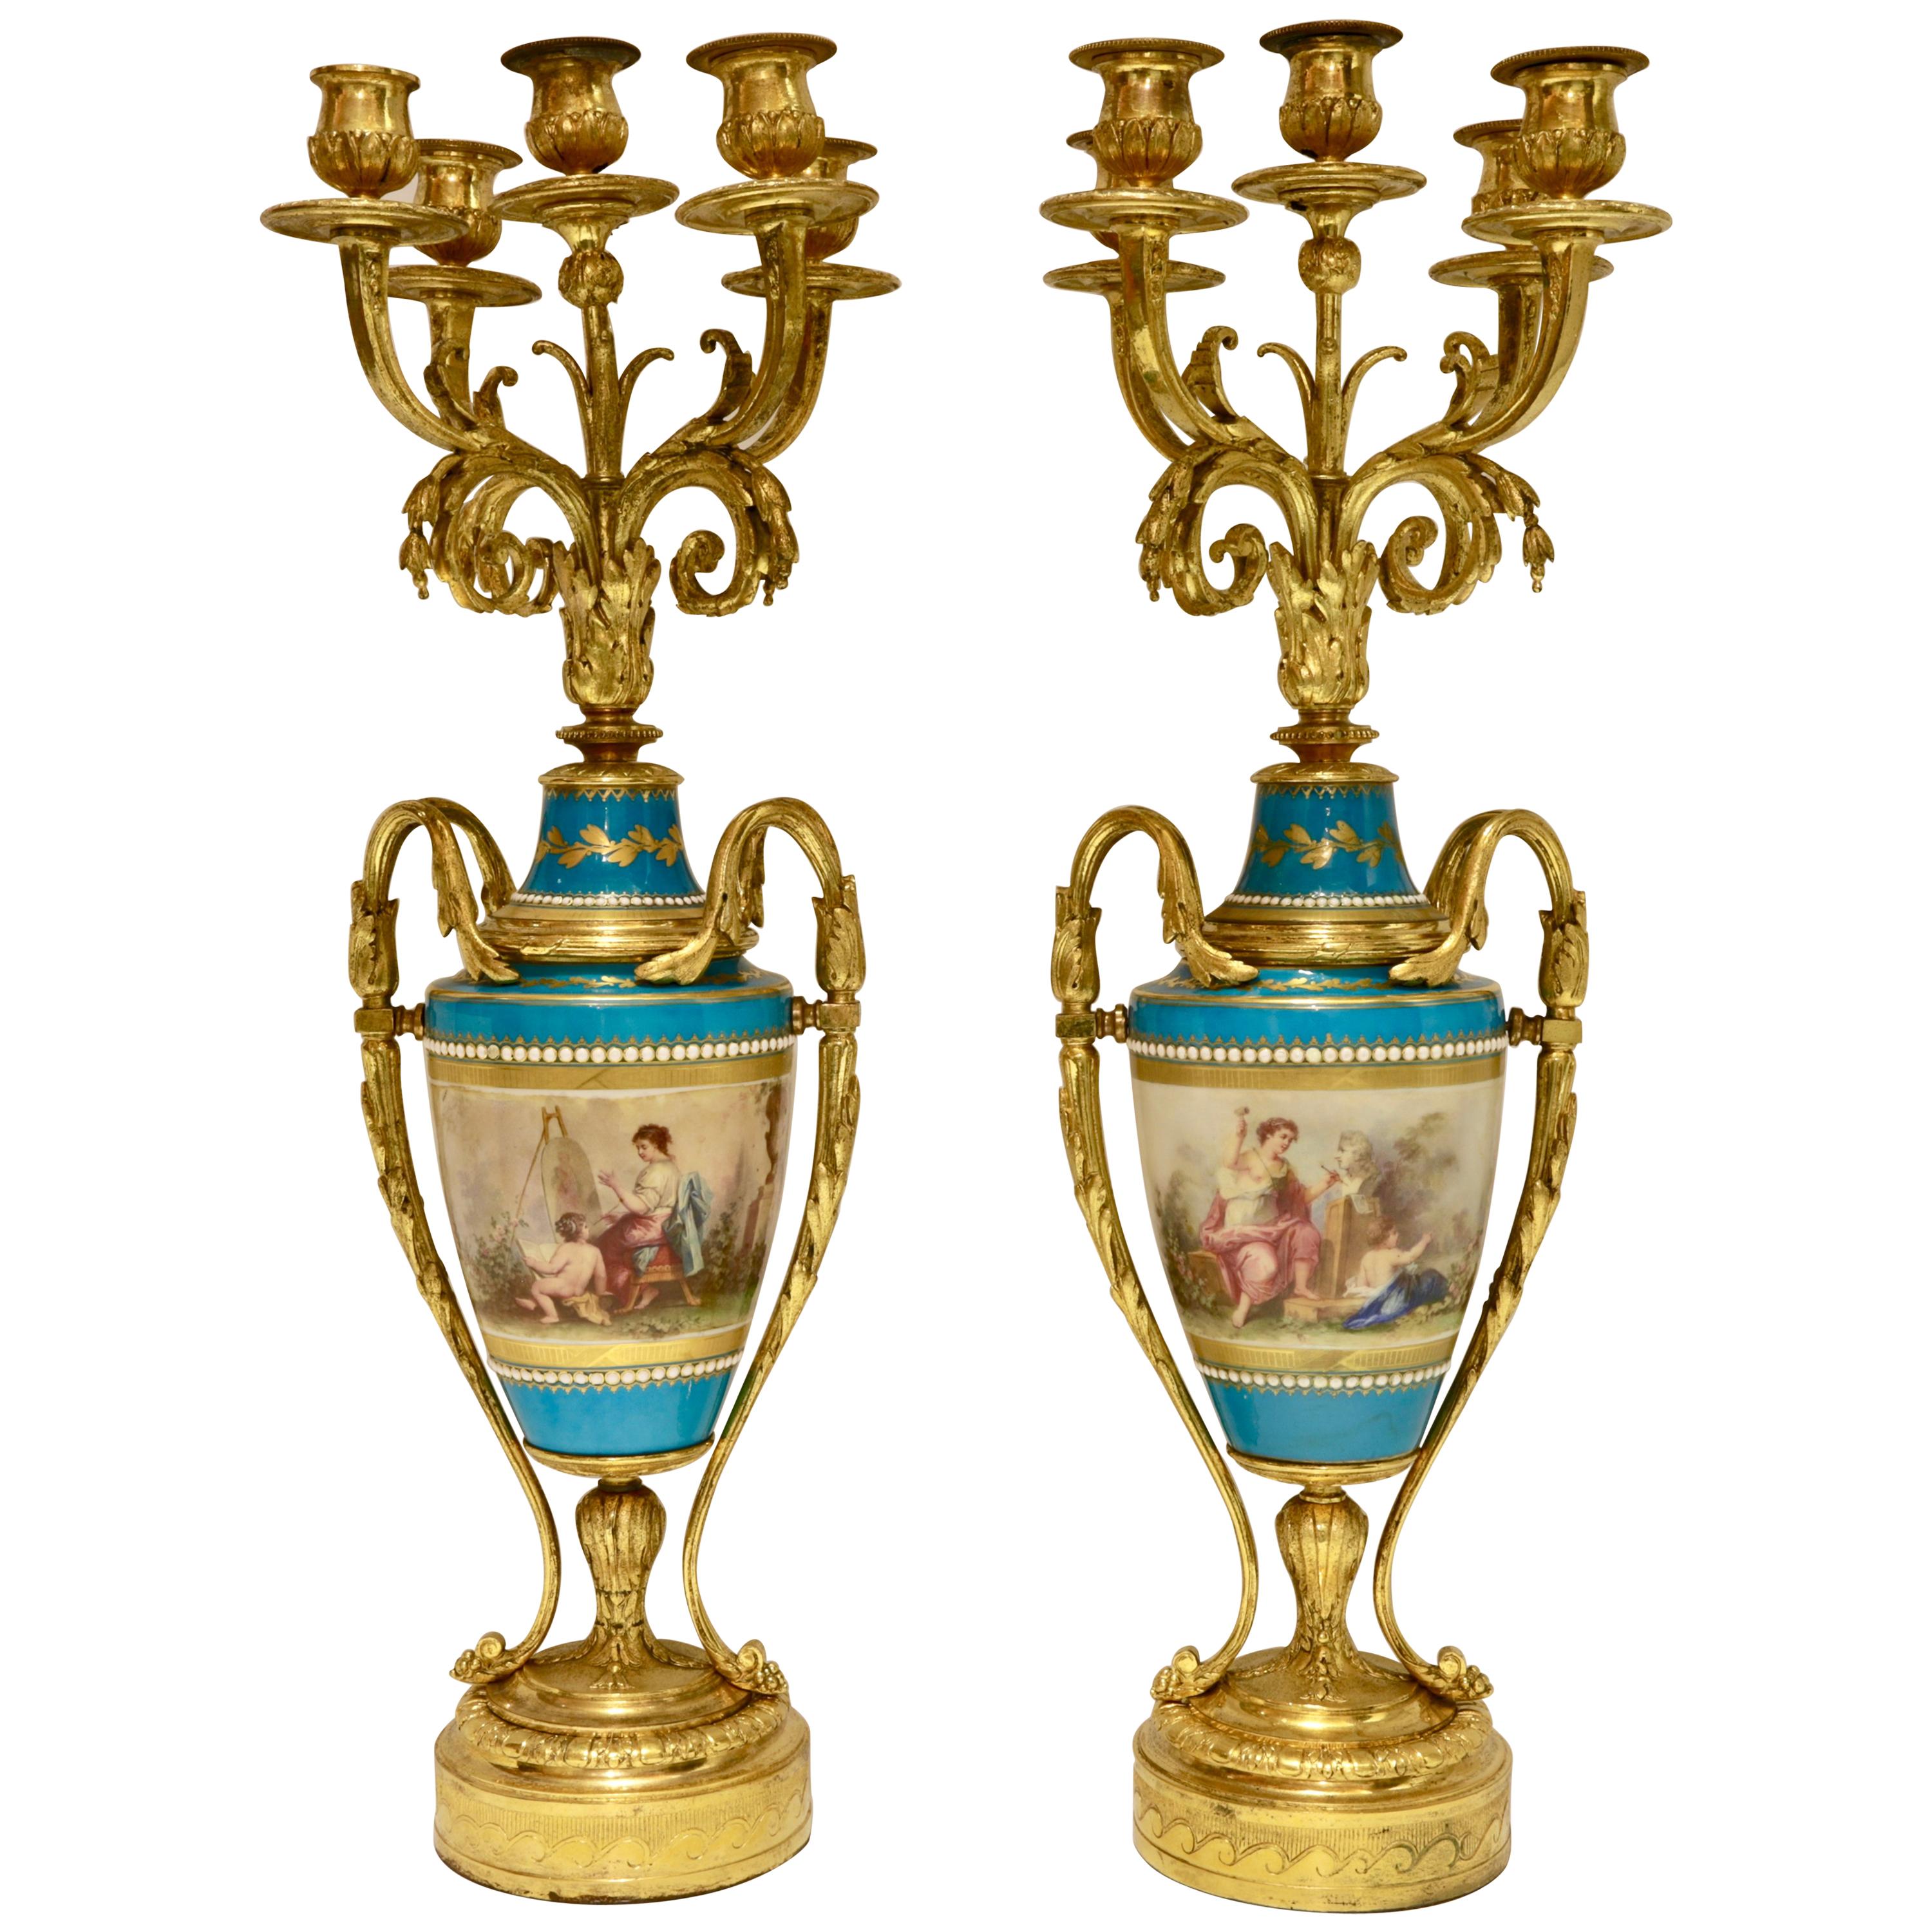 Pair of Celeste Blue Sevres Style Porcelain Bronze-Mounted Candelabras